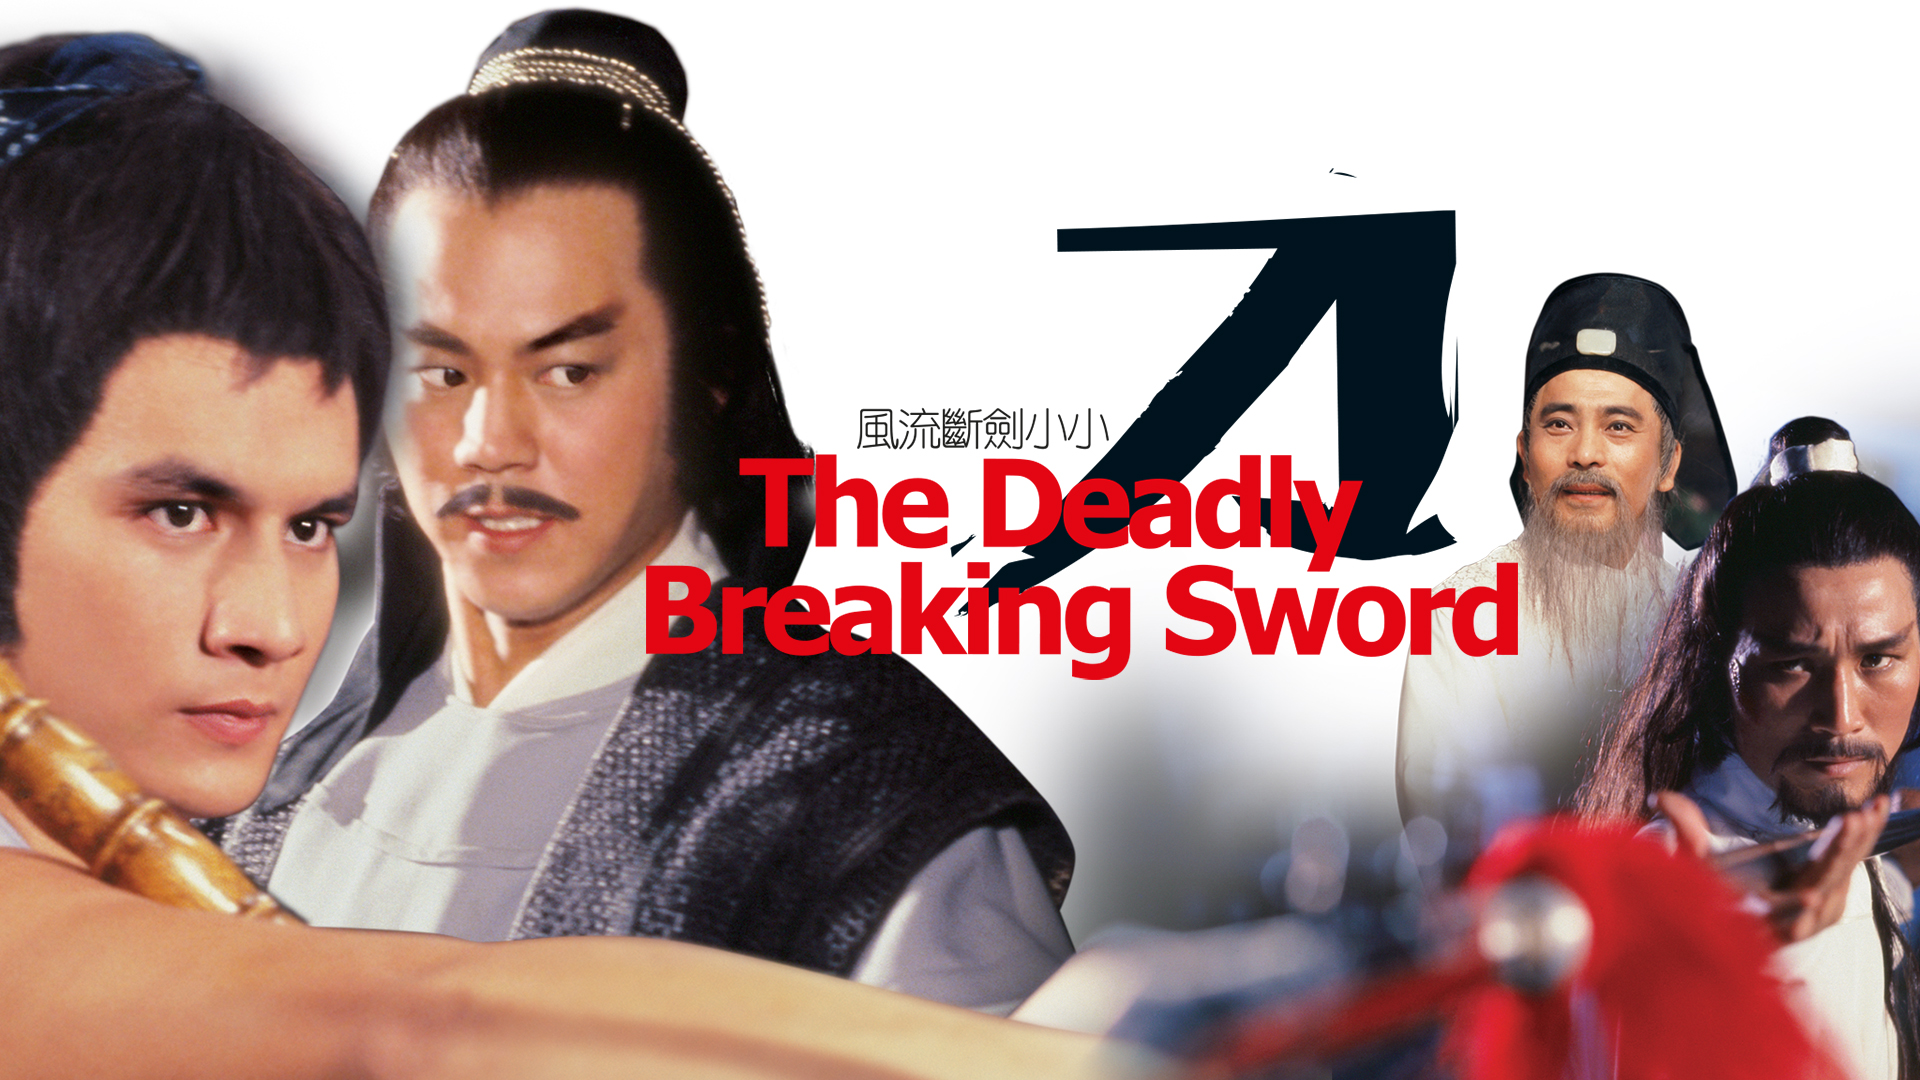 دانلود فیلم خارجی The Deadly Breaking Sword 1979